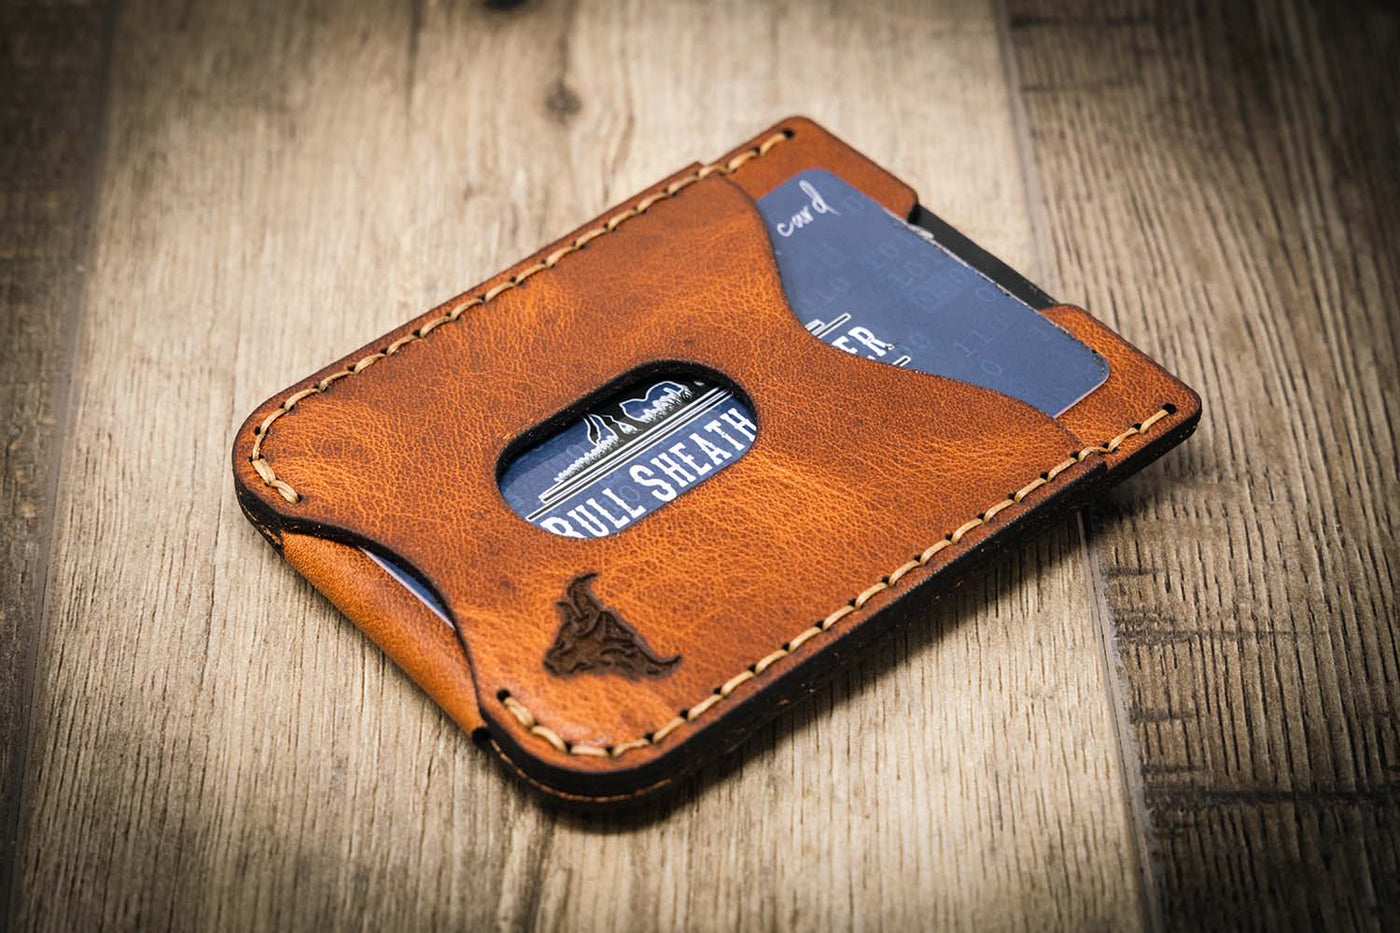 McClard's Gifts: leather slim front pocket wallet/money clip